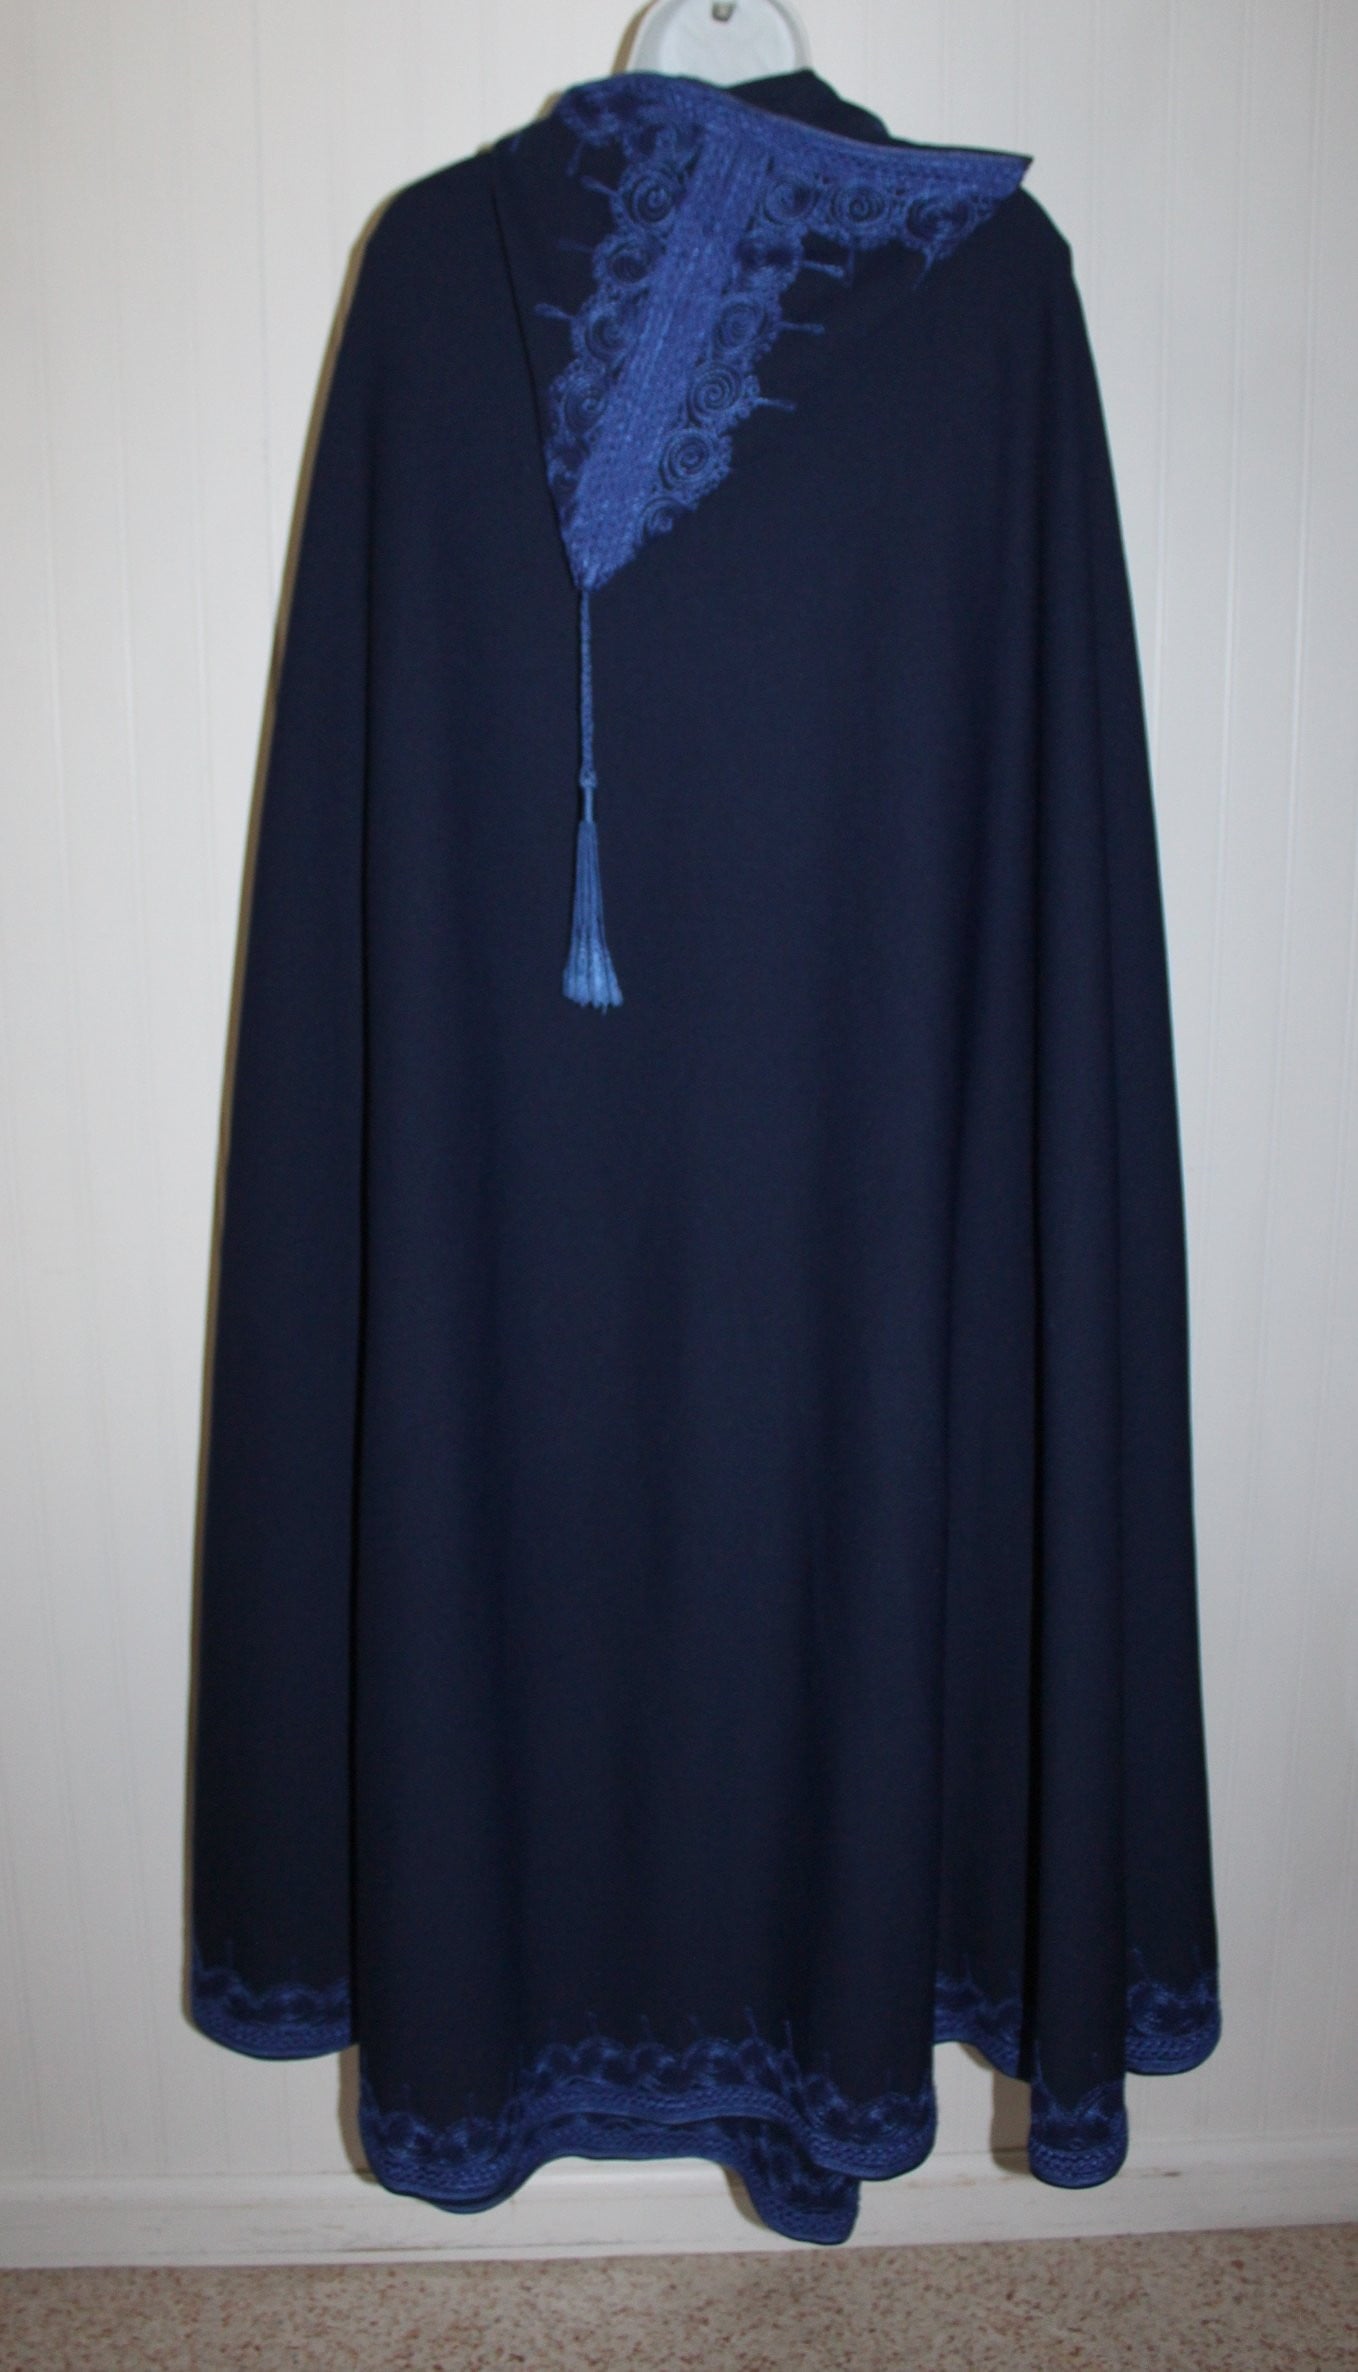 Islam Embroidered Dress Cloak - Turkey Morocco - Dark Blue - tassel Head Cover warm outfit